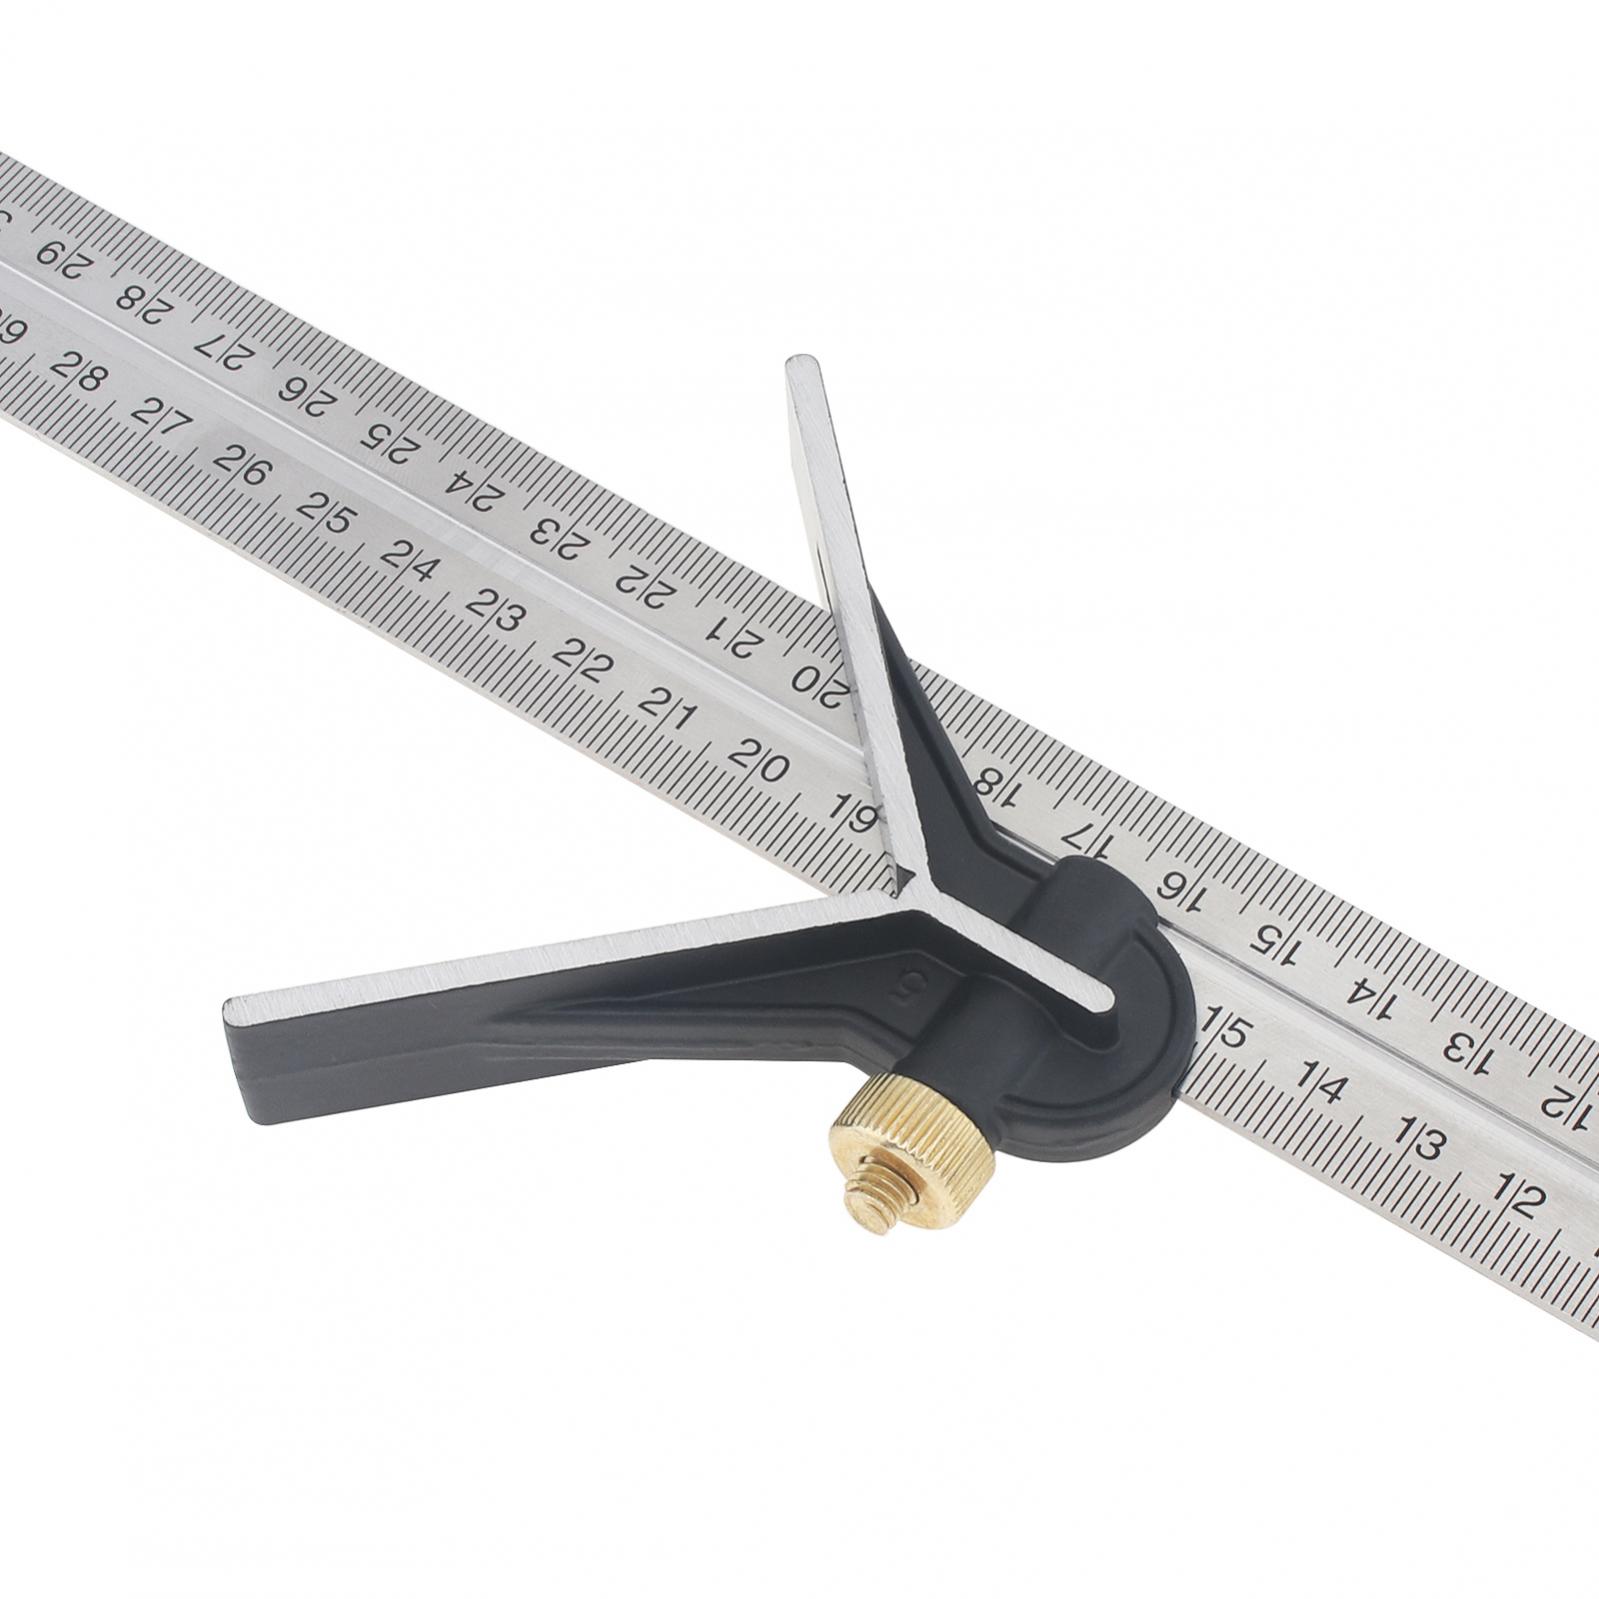 Navigation measuring Tool. Measuring tools